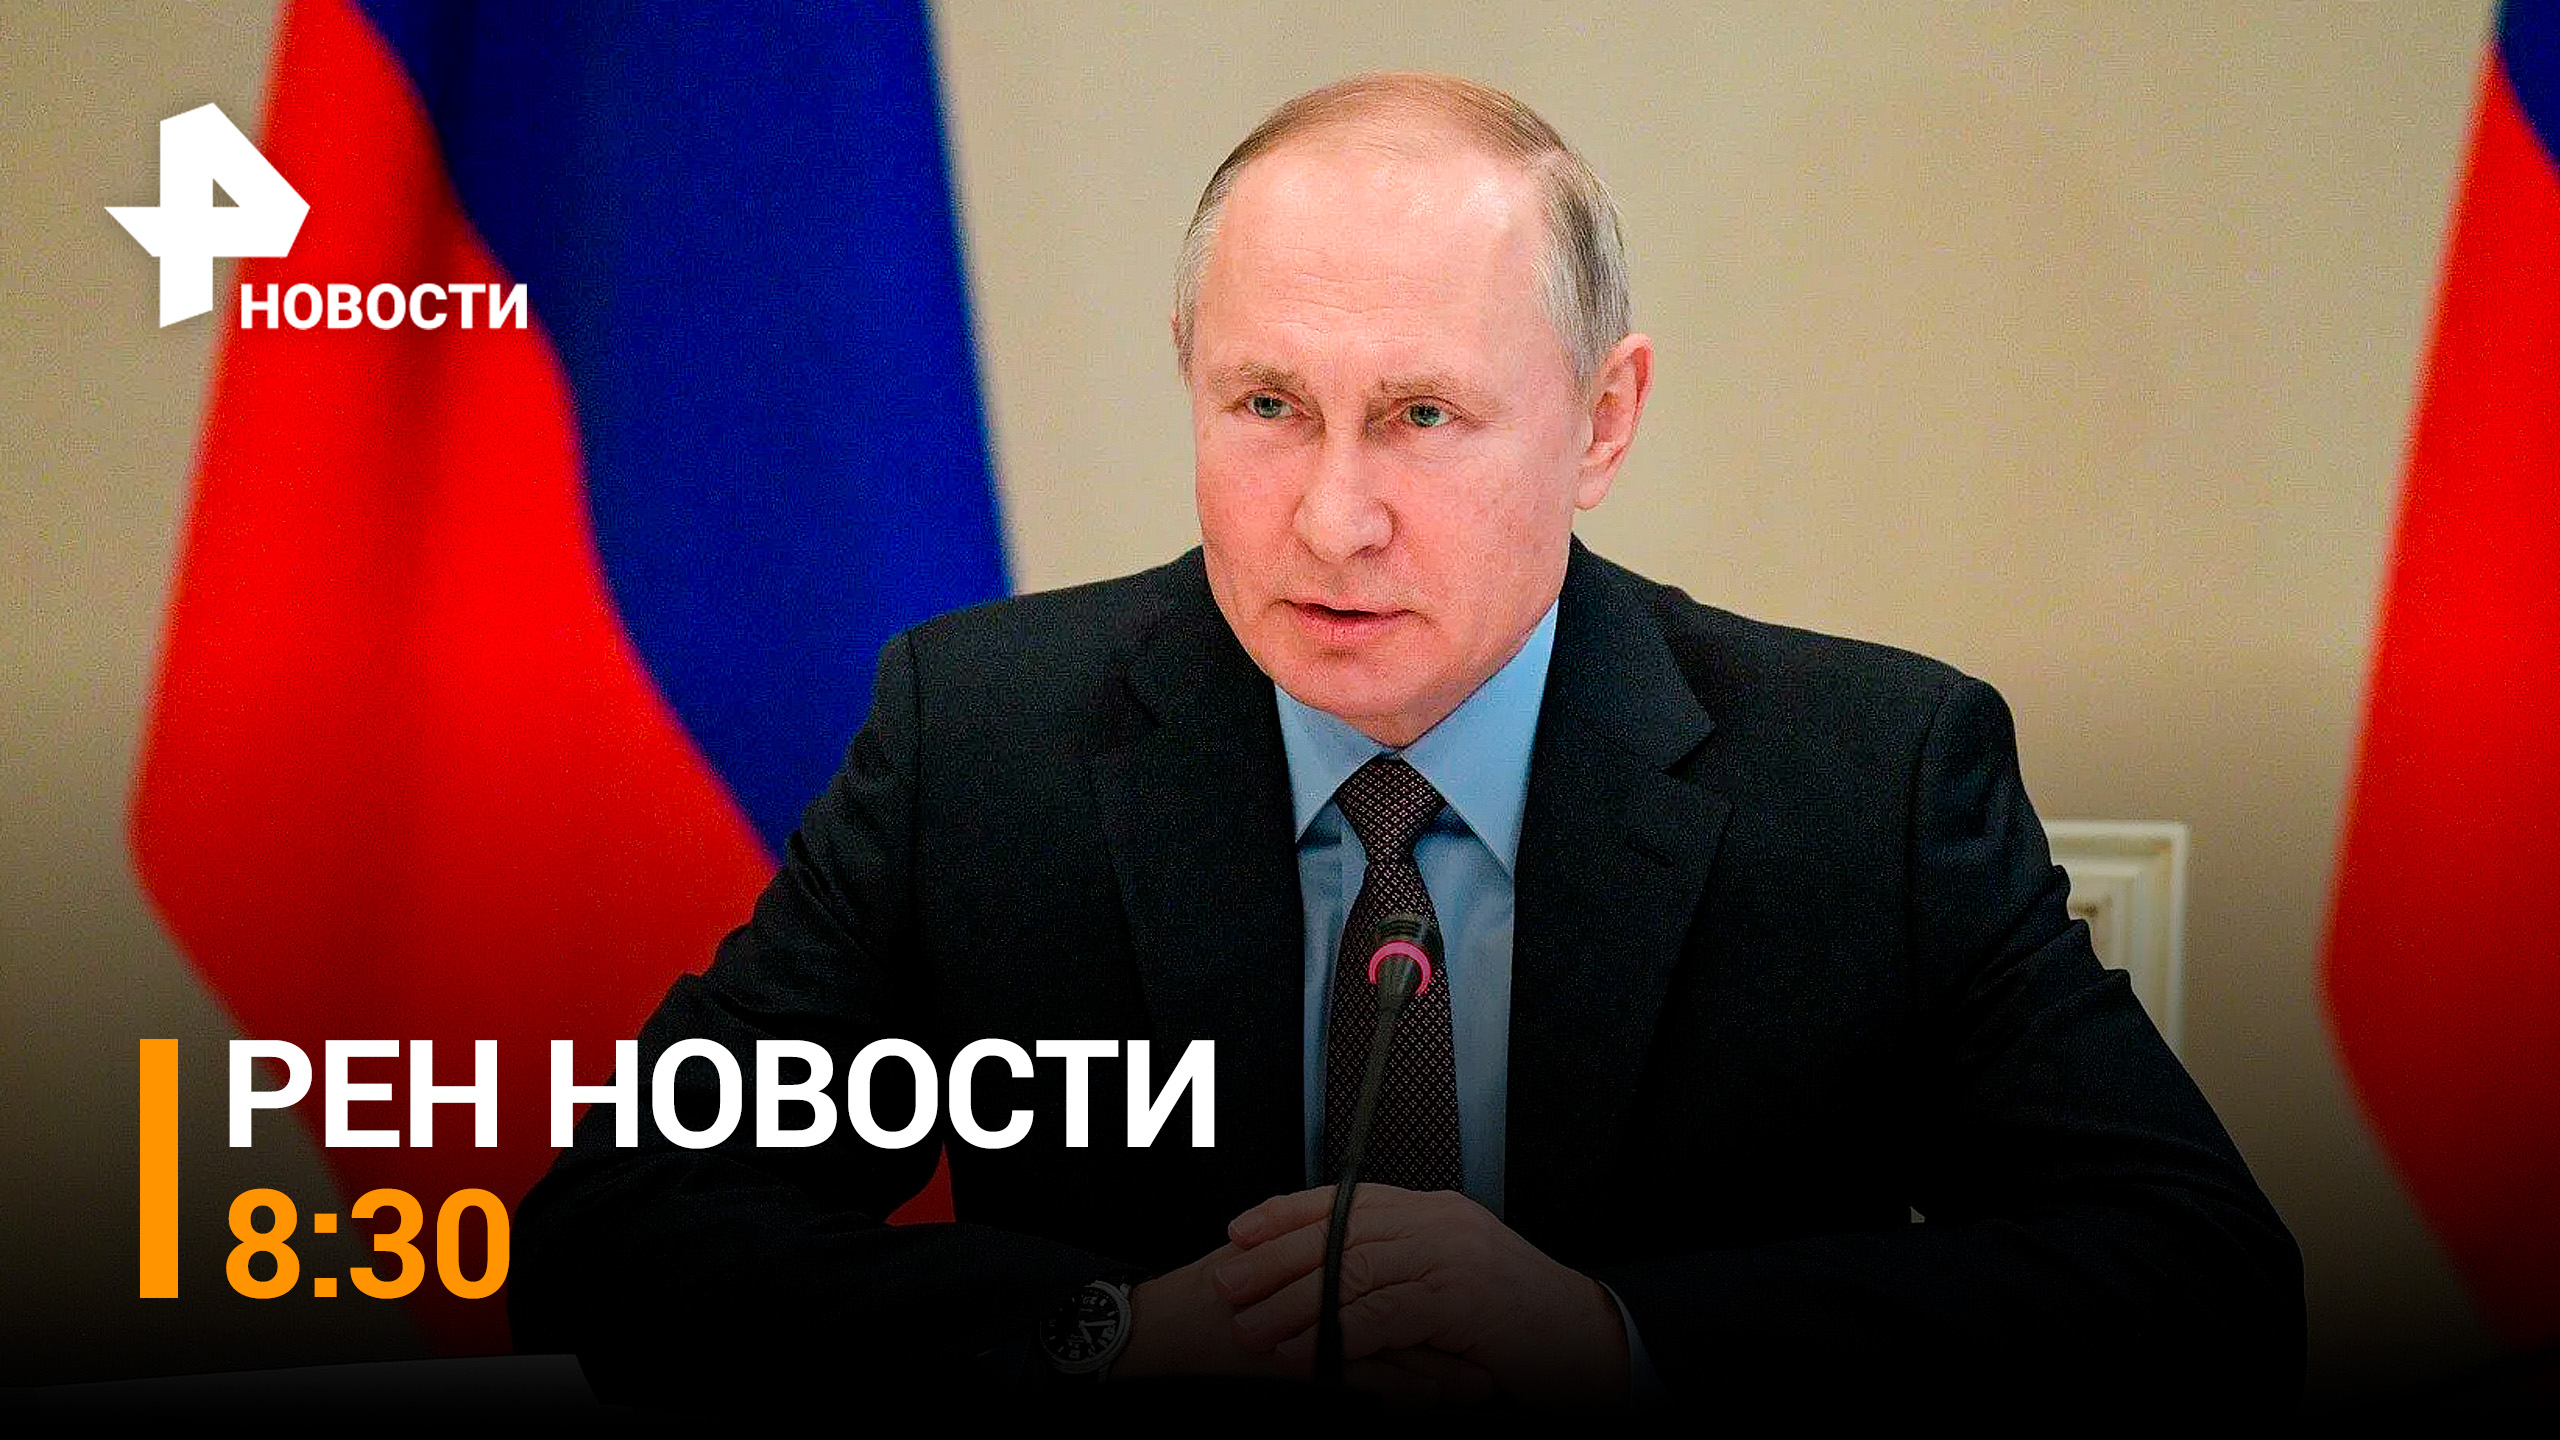 ⚡️Владимир Путин объявил частичную мобилизацию / РЕН Новости 8:30 от 21.09.22